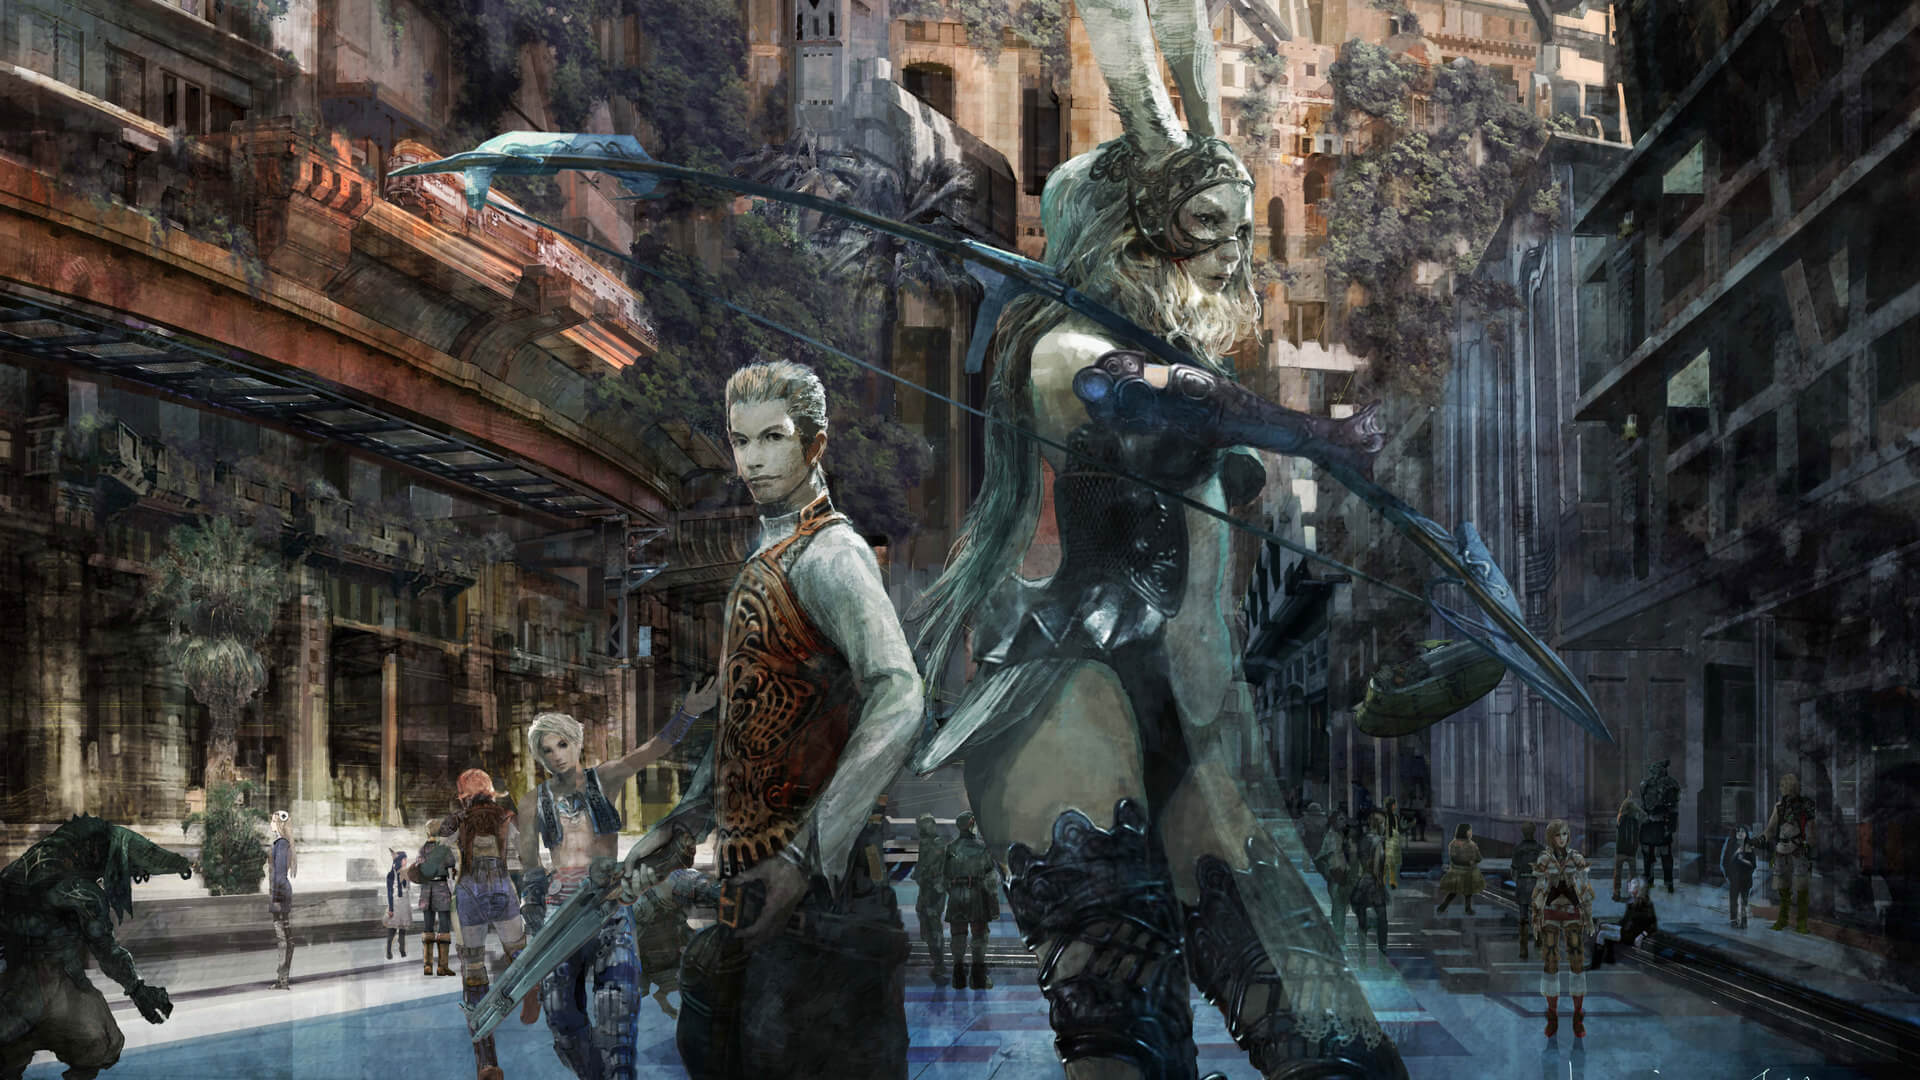 Final Fantasy XII: The Zodiac Age (2019), Switch Game